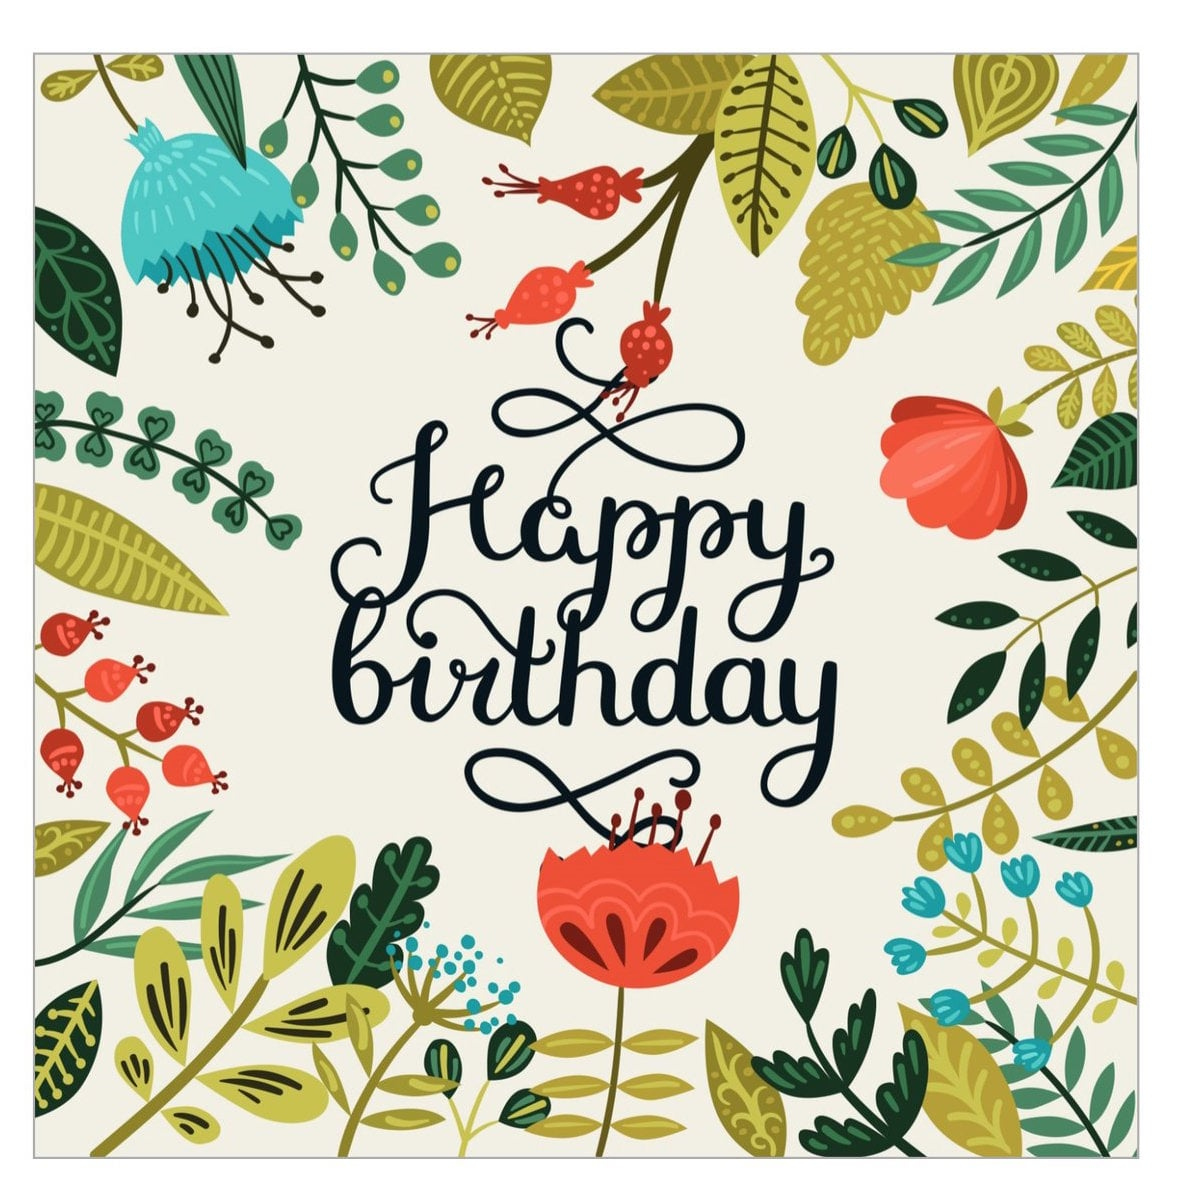 Free Printable Cards For Birthdays | Popsugar Smart Living for Free Printable Greeting Cards No Sign Up